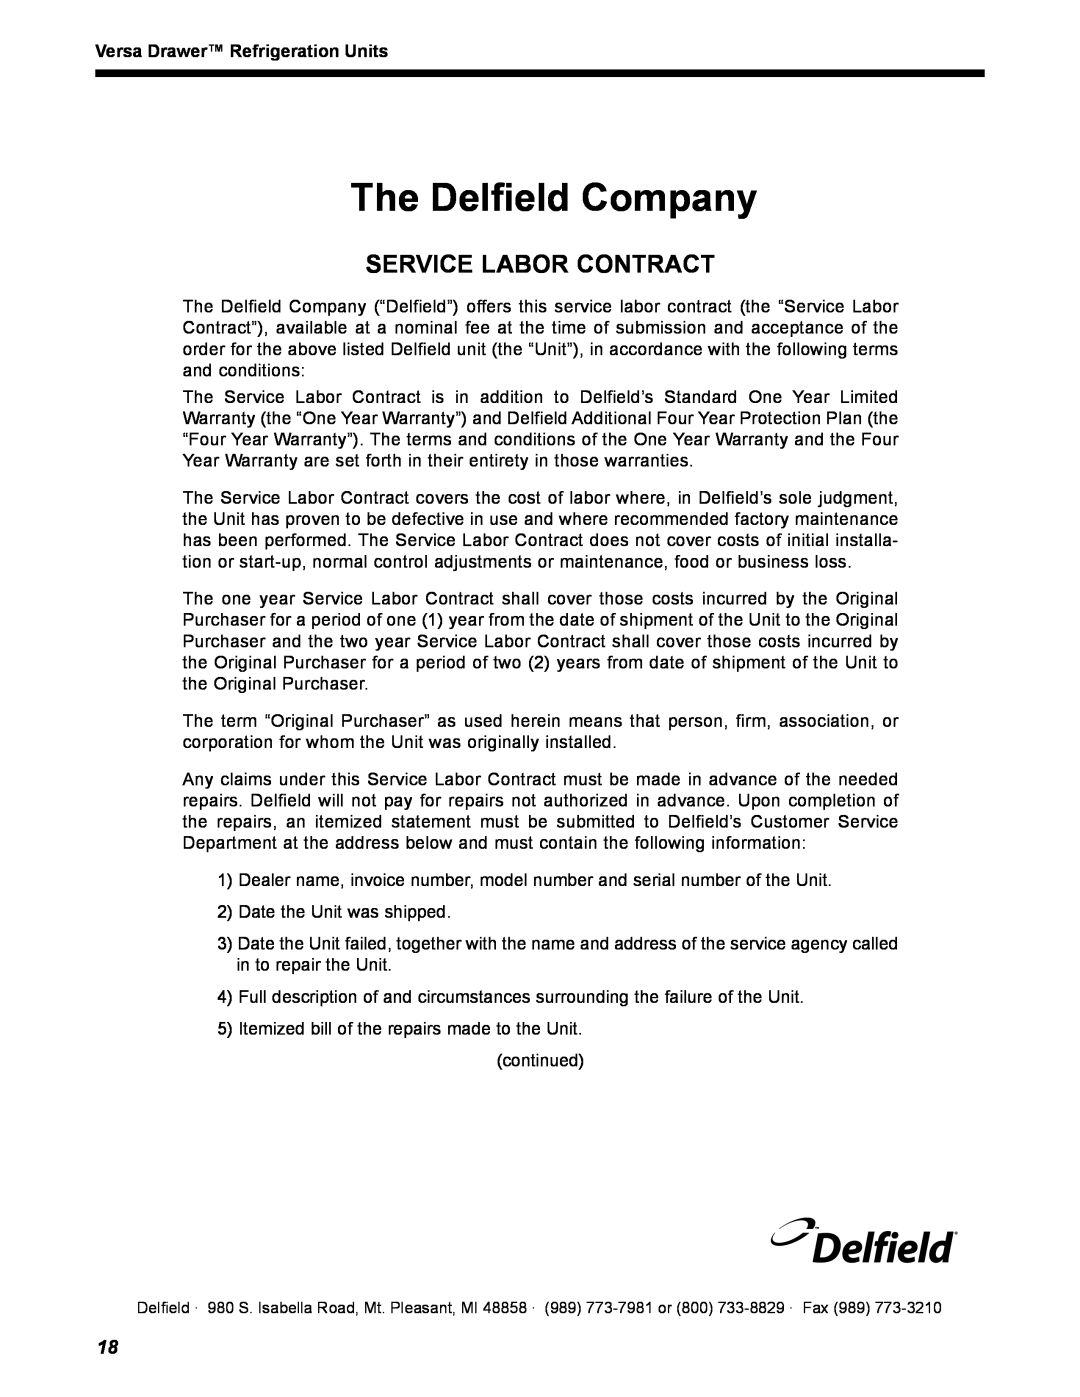 Delfield 18600VD manual The Delfield Company, Service Labor Contract, Versa Drawer Refrigeration Units 